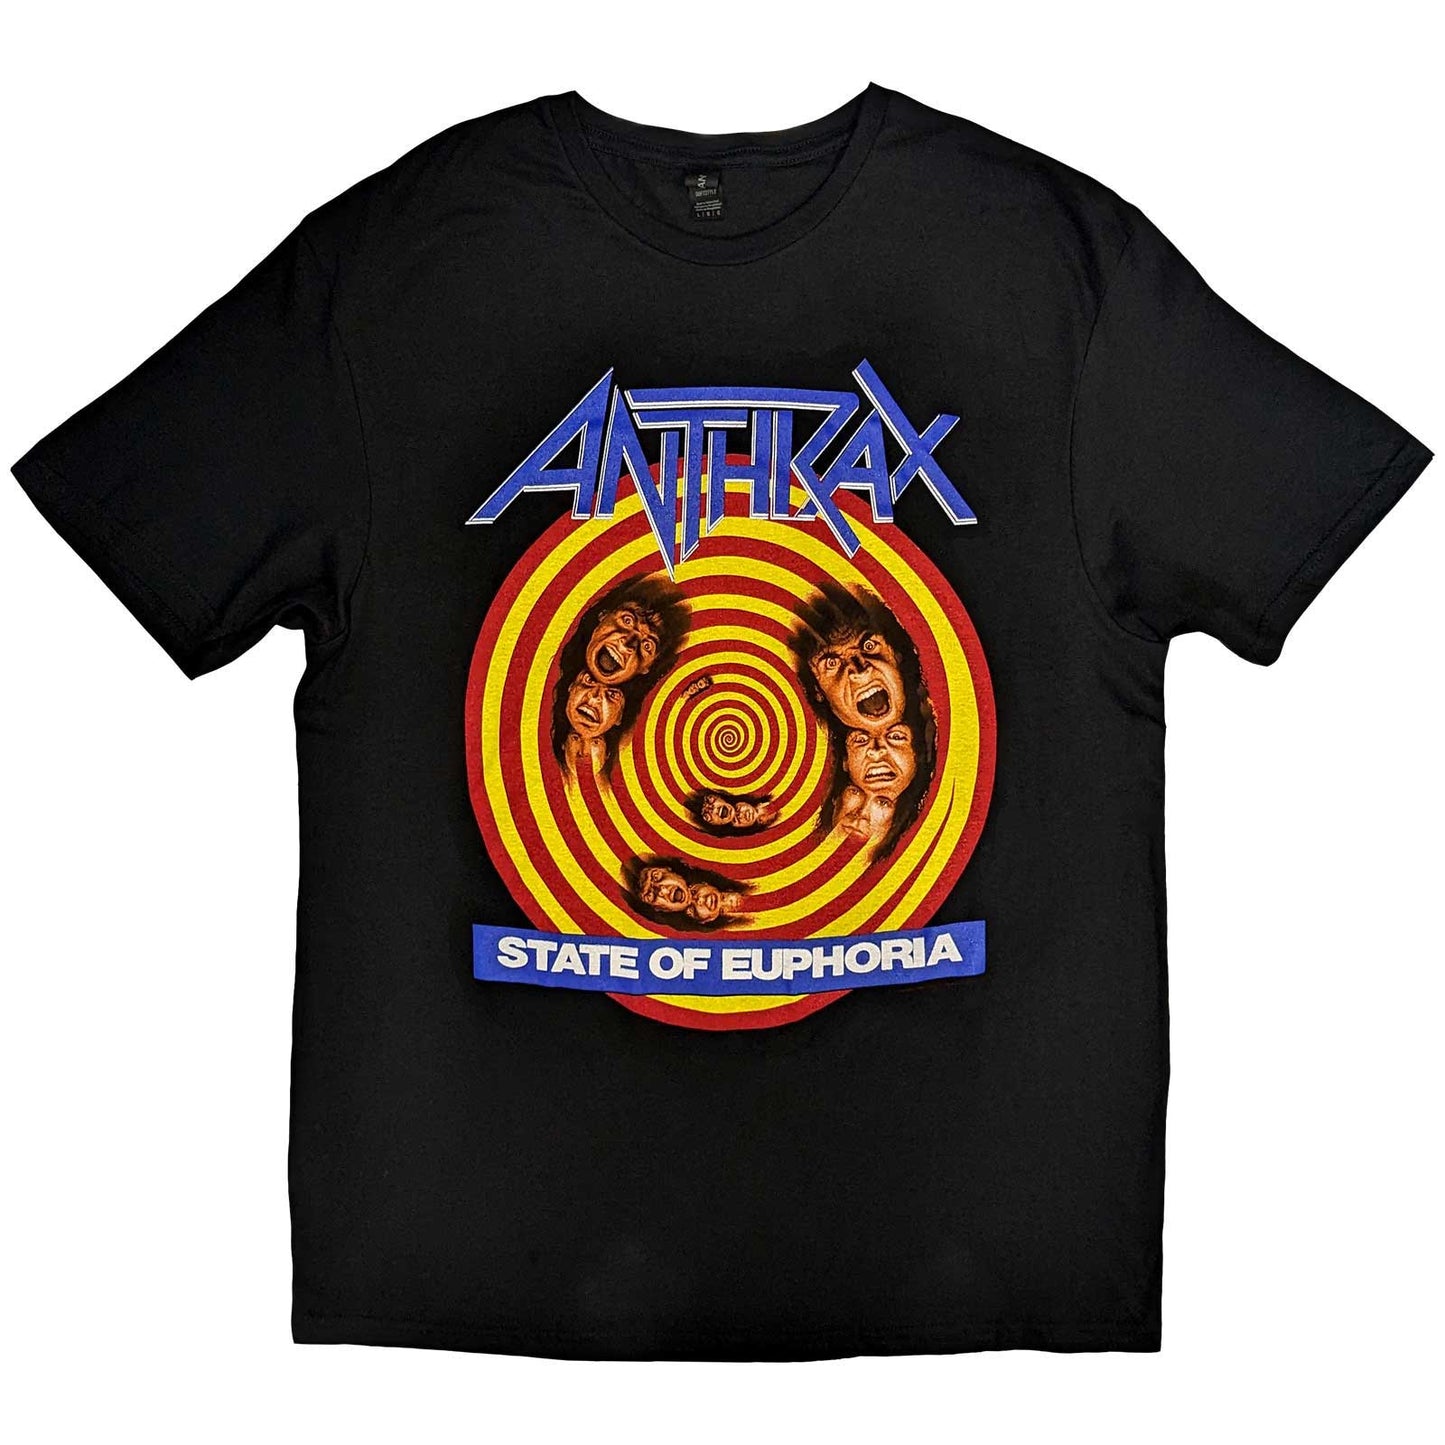 Anthrax T-Shirt: State of Euphoria